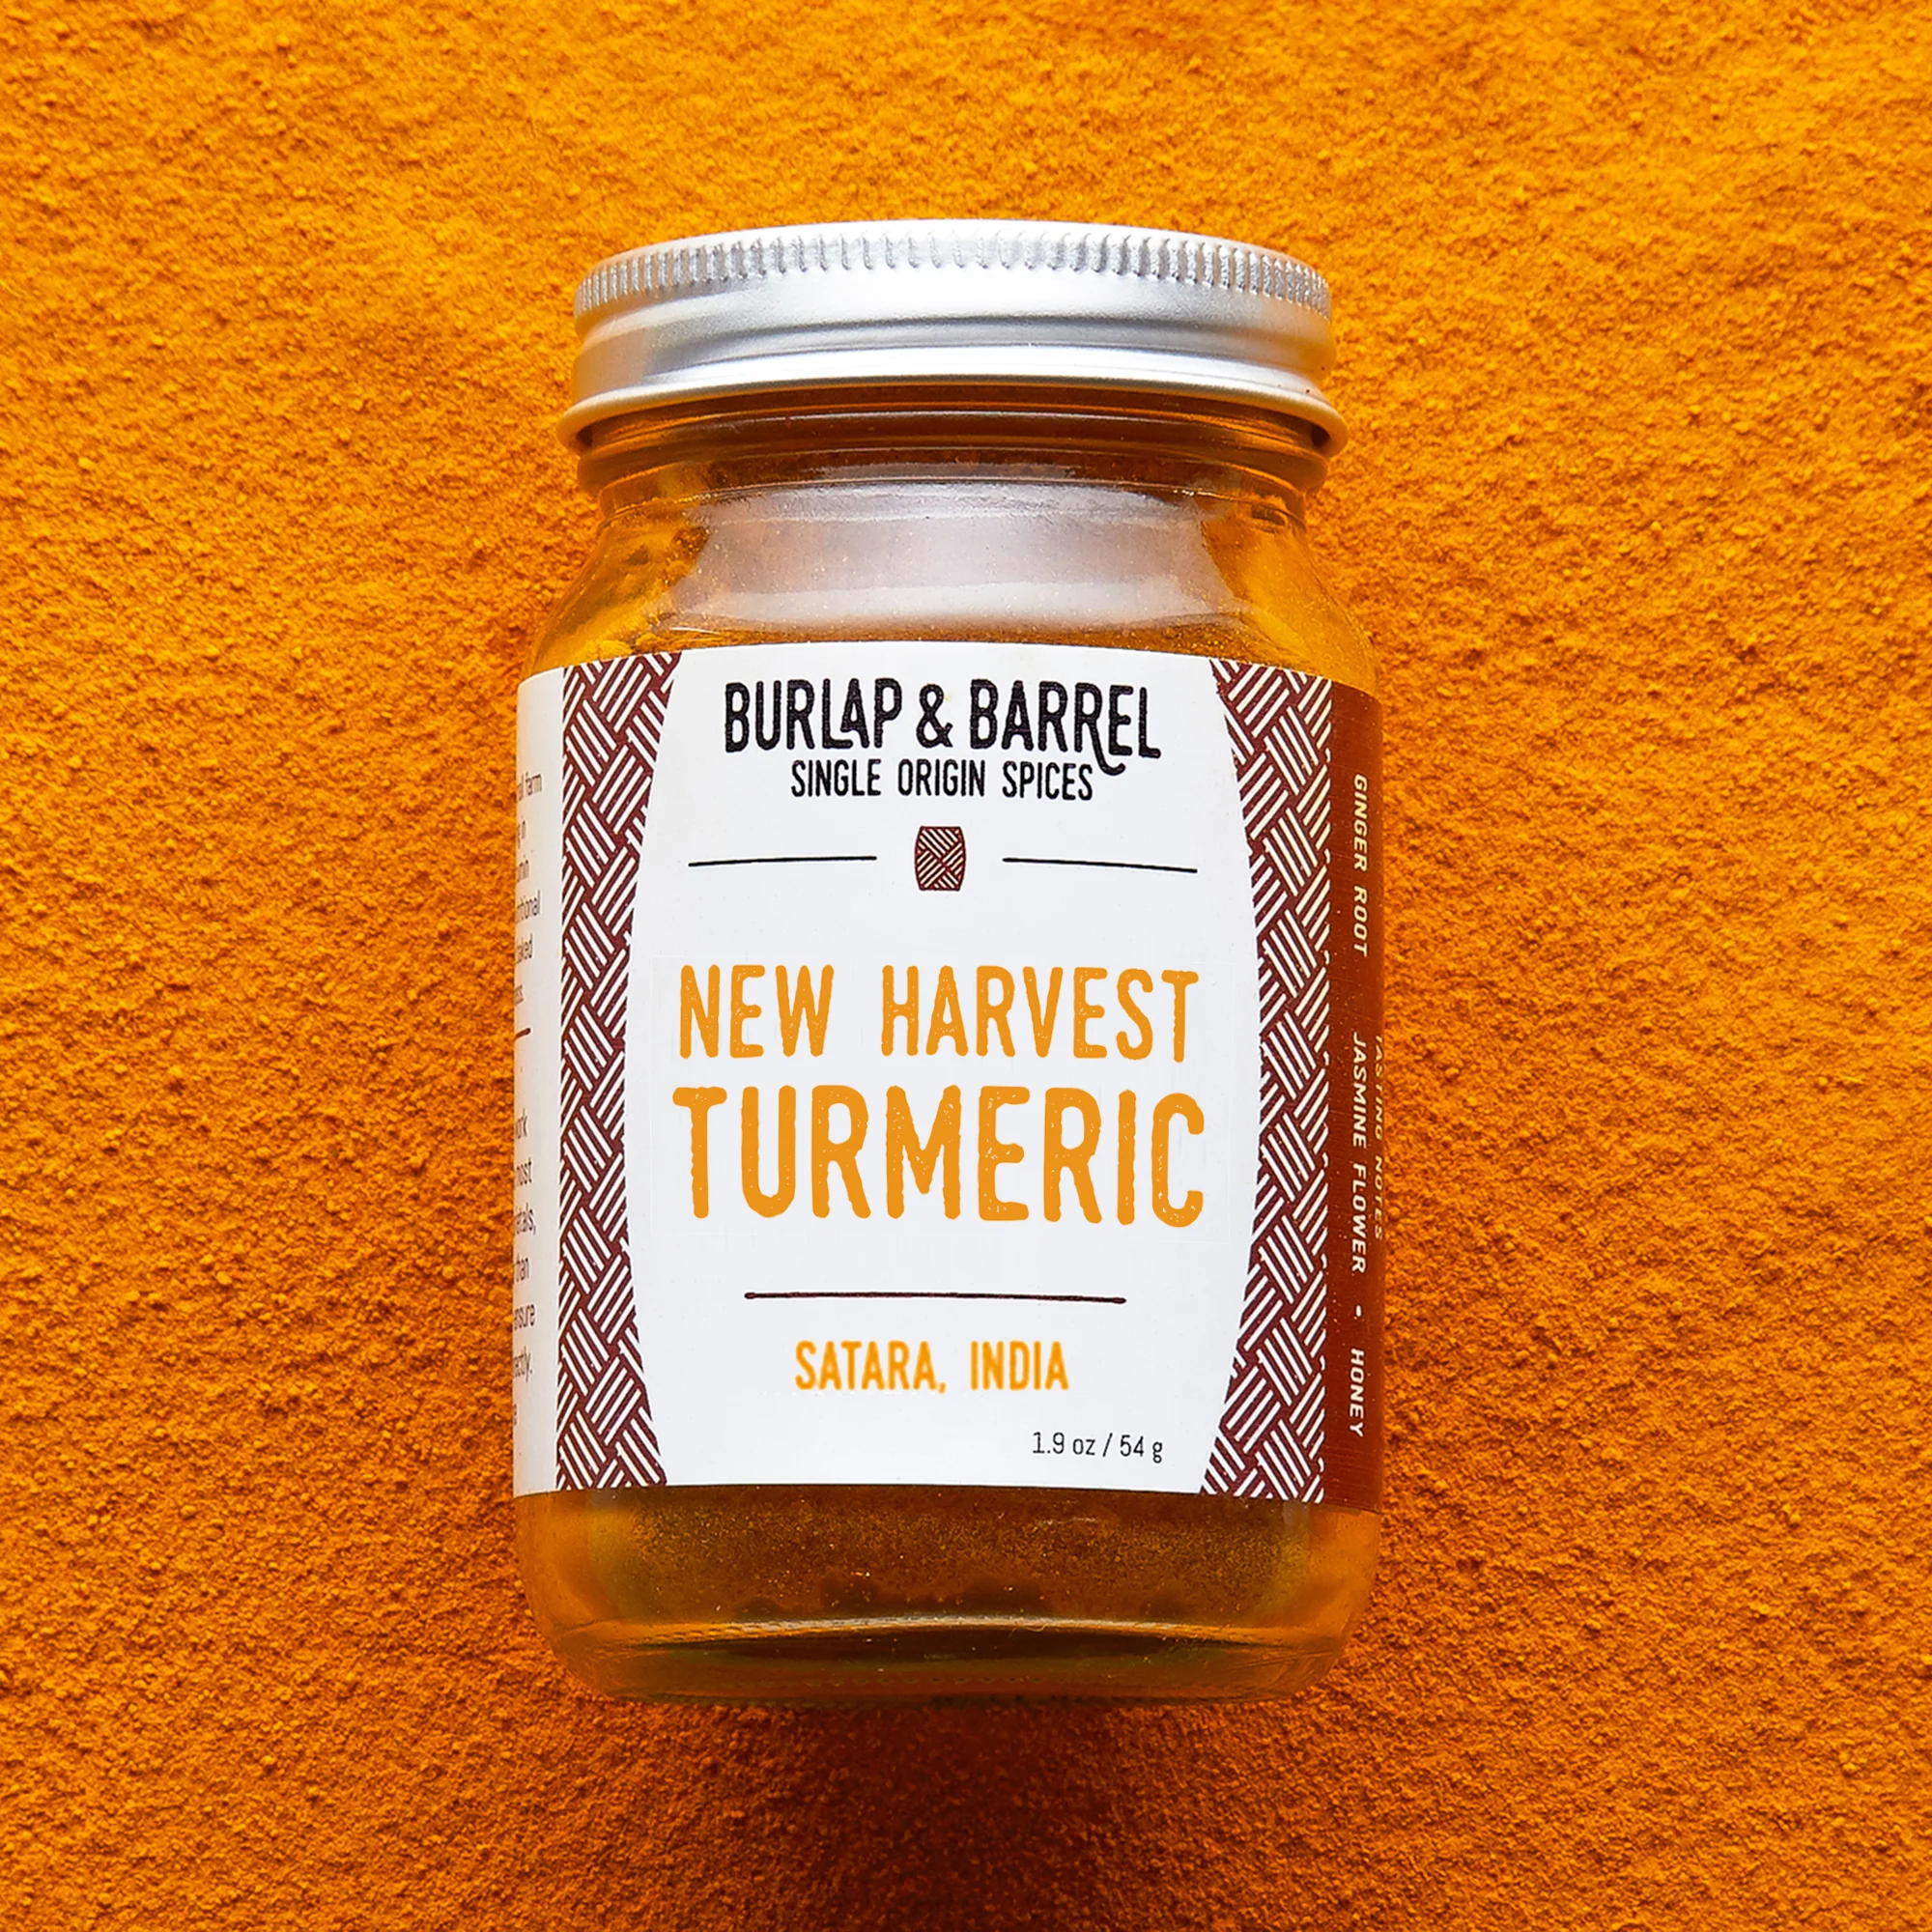 New Harvest Turmeric From Burlap & Barrel